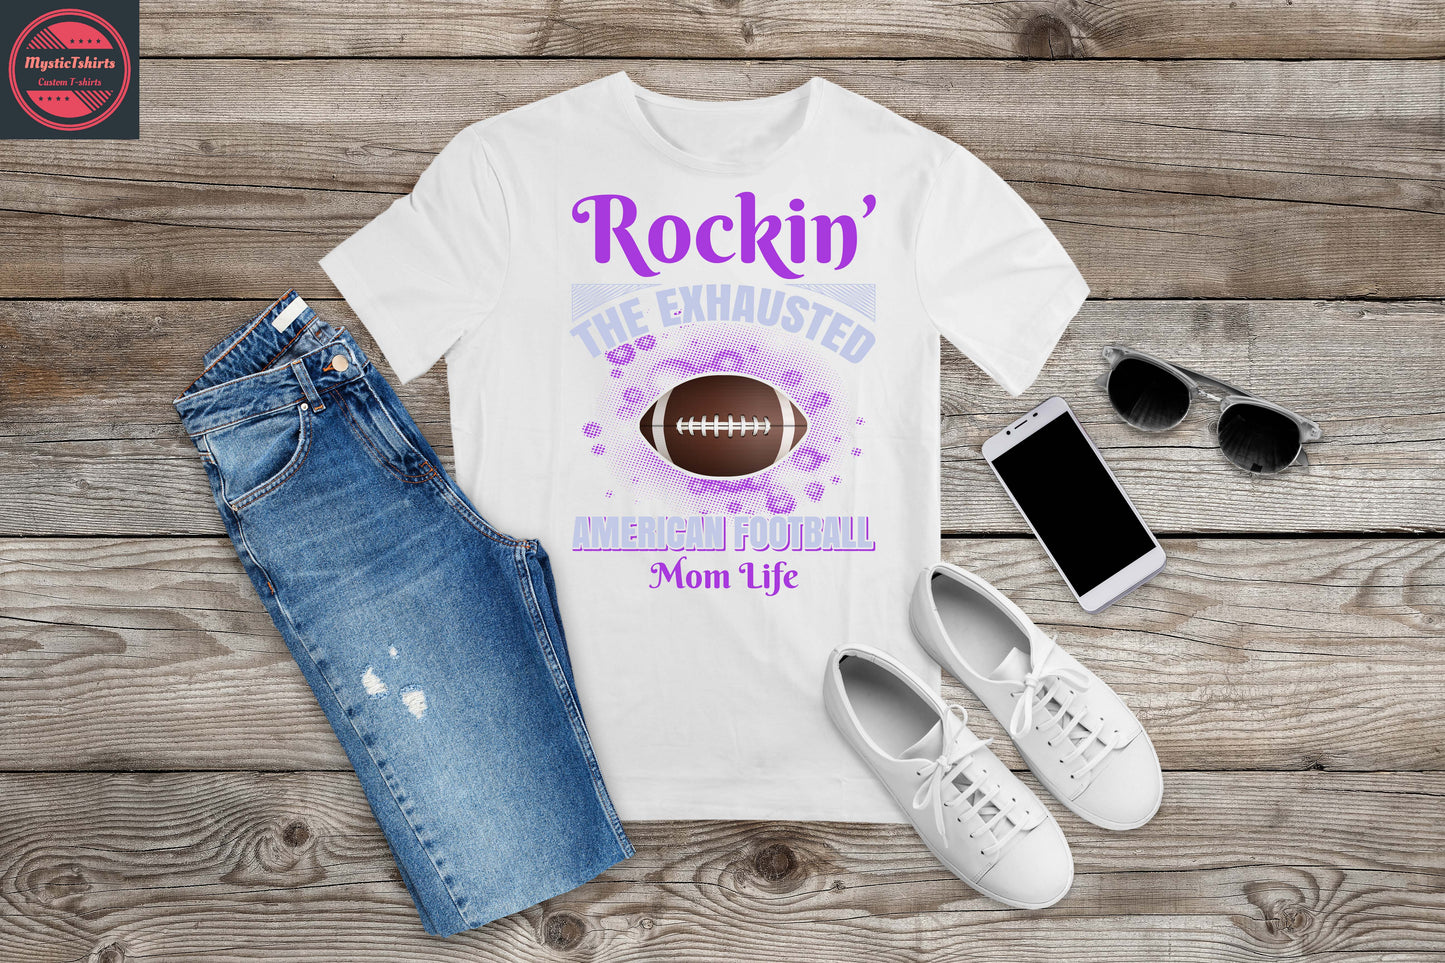 409. ROCKING THE EXHAUSTED AMERICAN FOOTBALL MOM LIFE, Custom Made Shirt, Personalized T-Shirt, Custom Text, Make Your Own Shirt, Custom Tee